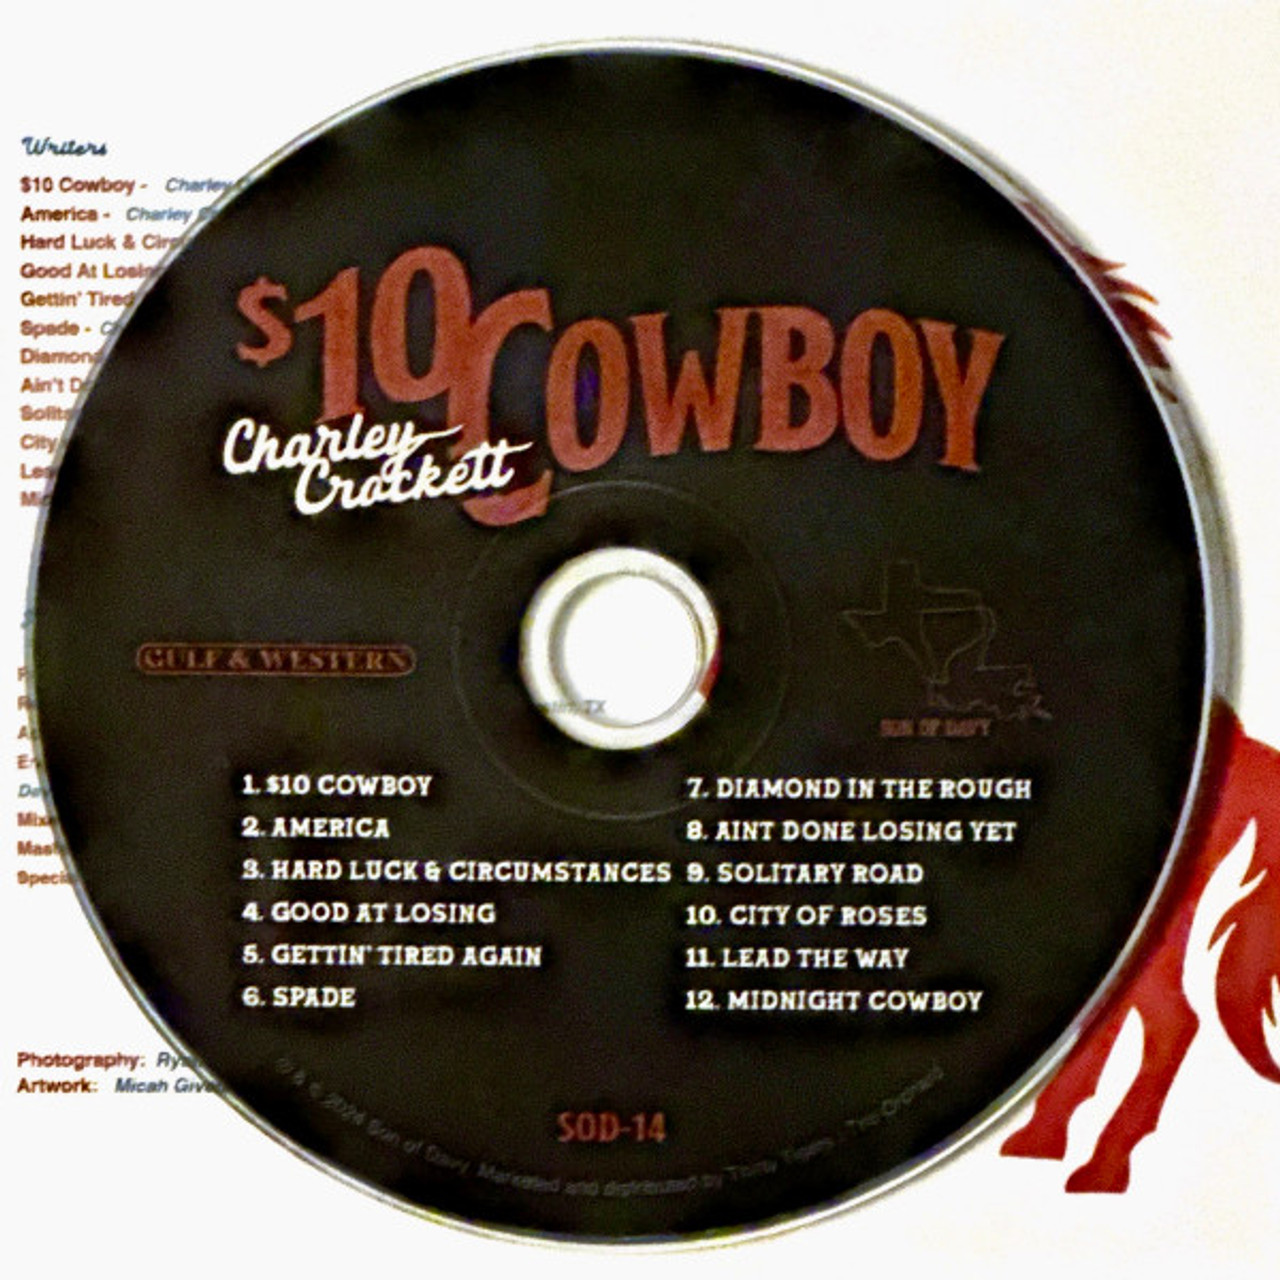 $10 Cowboy - Crockett